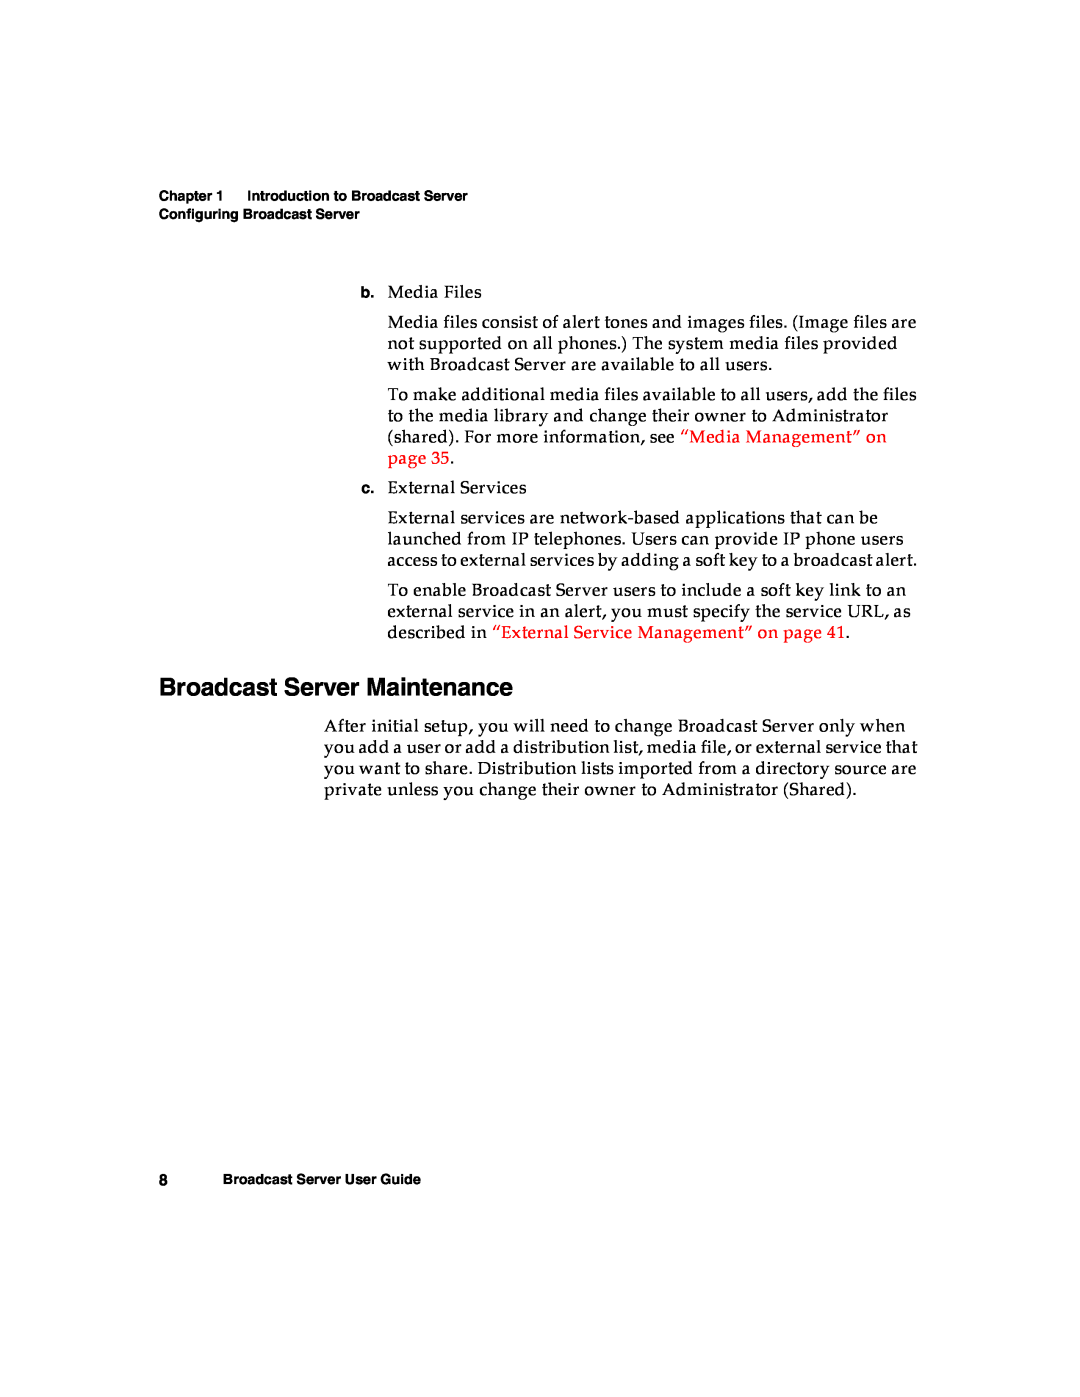 Nortel Networks warranty Broadcast Server Maintenance 